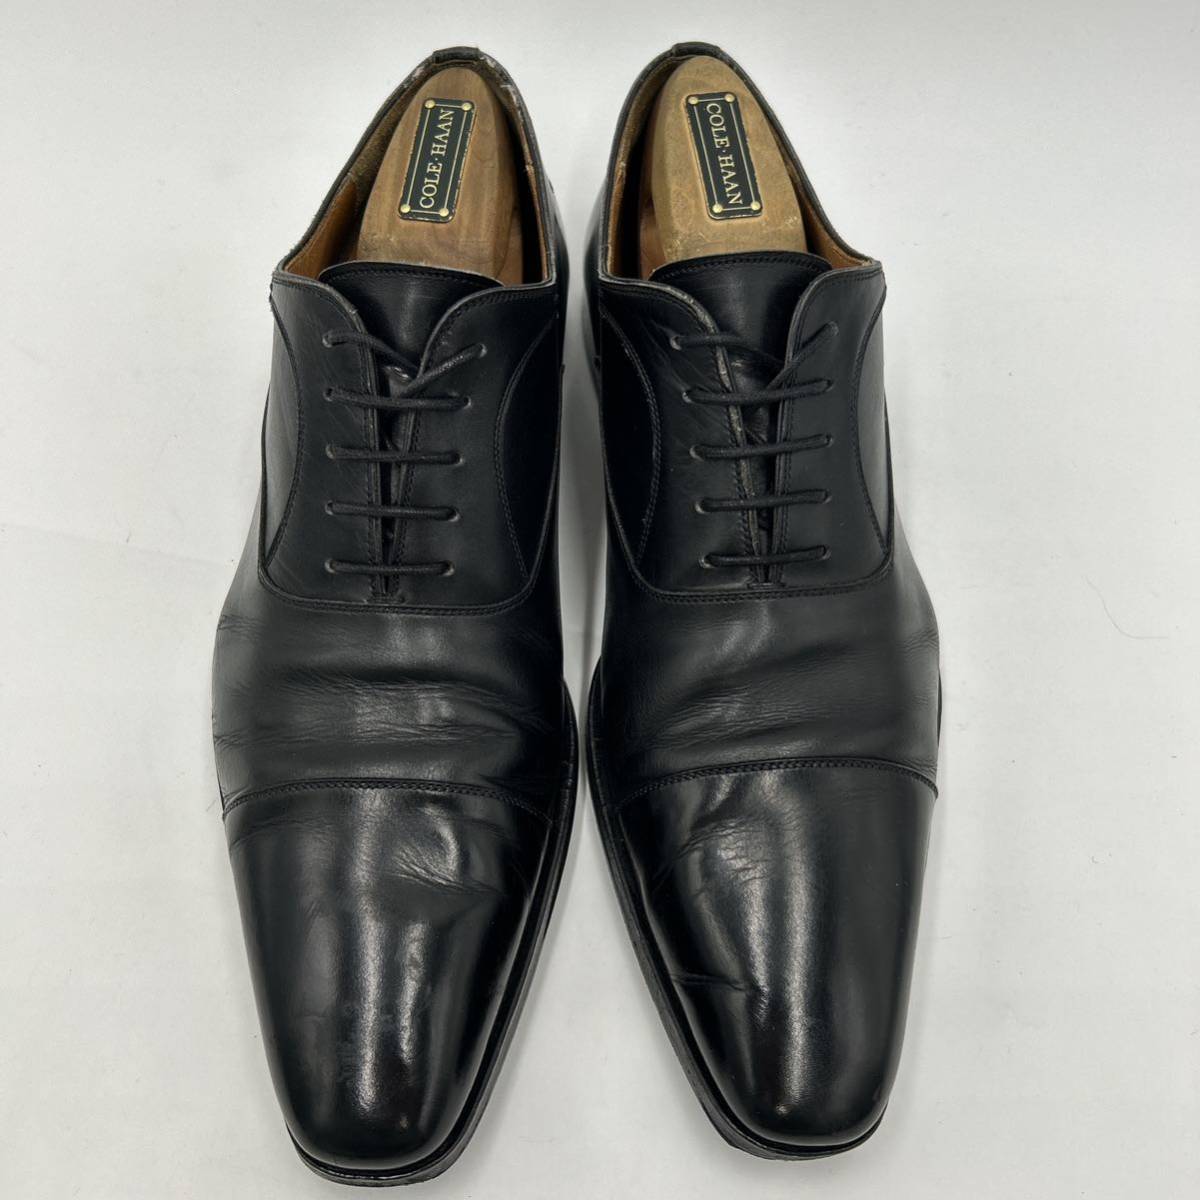 D @ スペイン製 '高級感溢れる' MAGNANNI マグナーニ 本革 ビジネスシューズ 革靴 EU42 26.5cm 紳士靴 ストレートチップ 内羽根式 BLACK _画像2